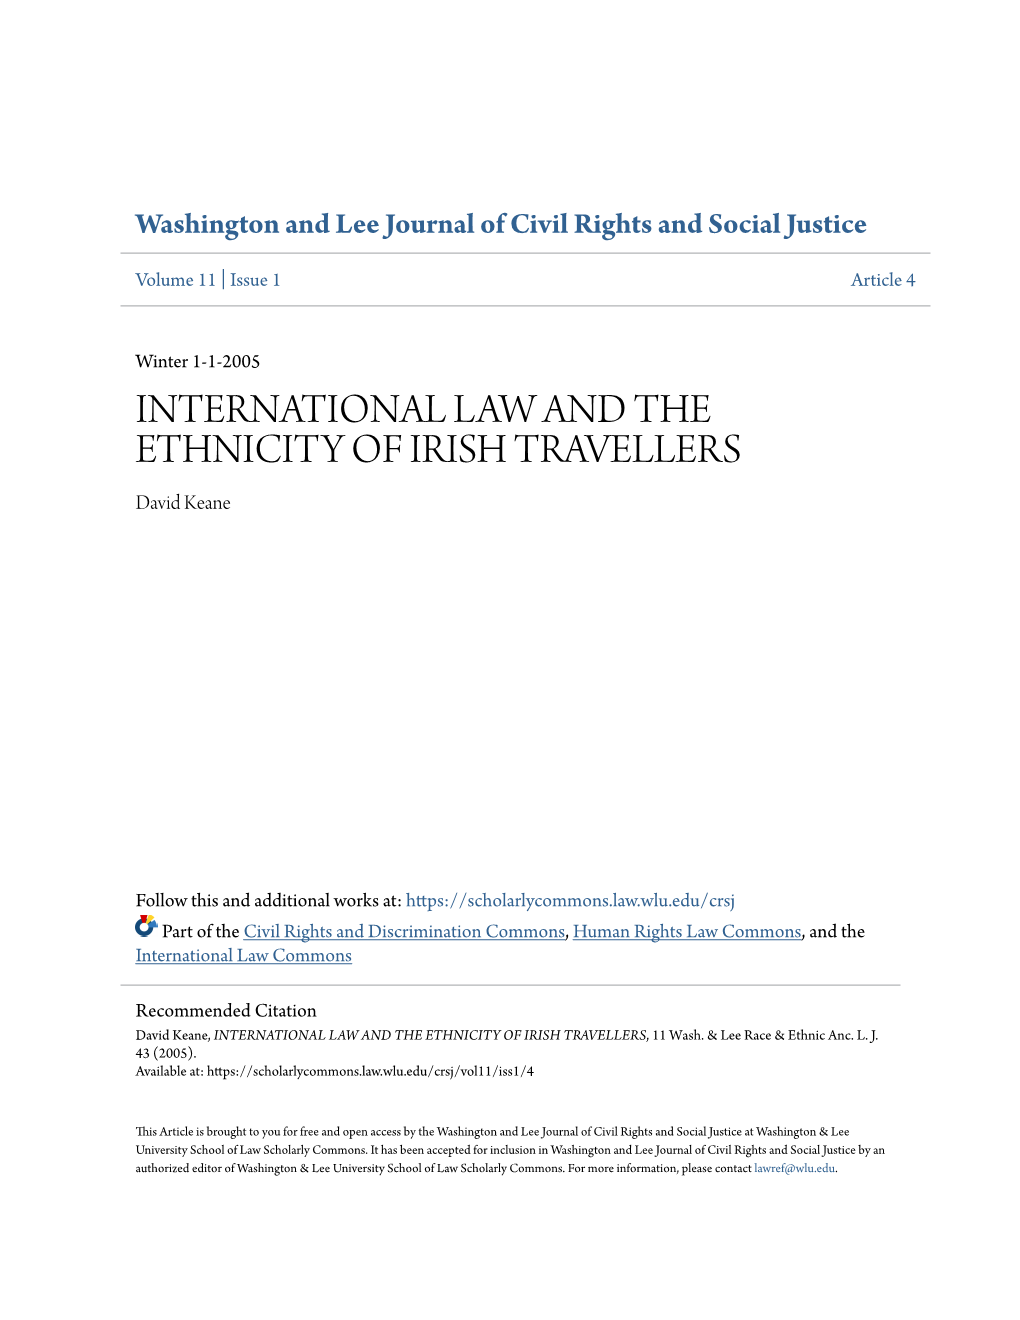 INTERNATIONAL LAW and the ETHNICITY of IRISH TRAVELLERS David Keane